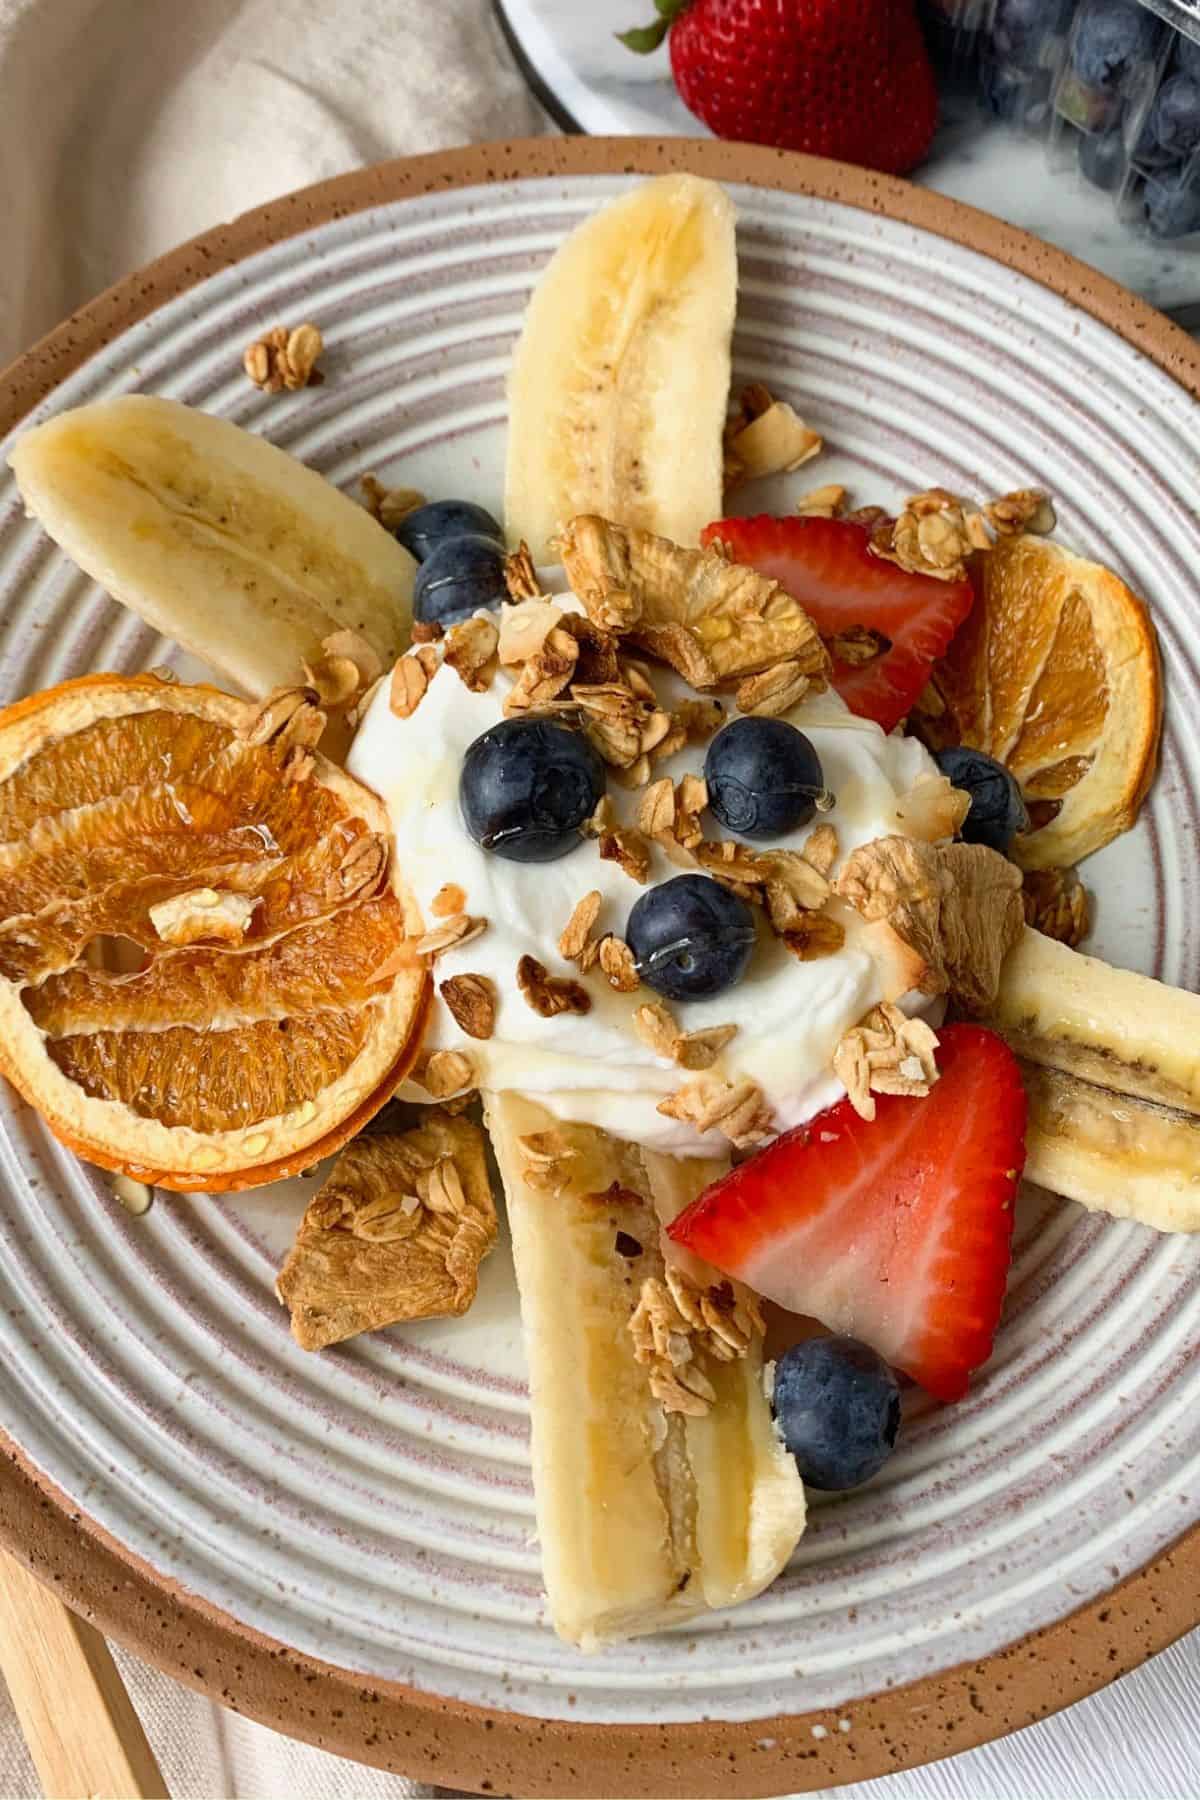 yogurt banana split topped with fresh fruit, dried fruit and granola